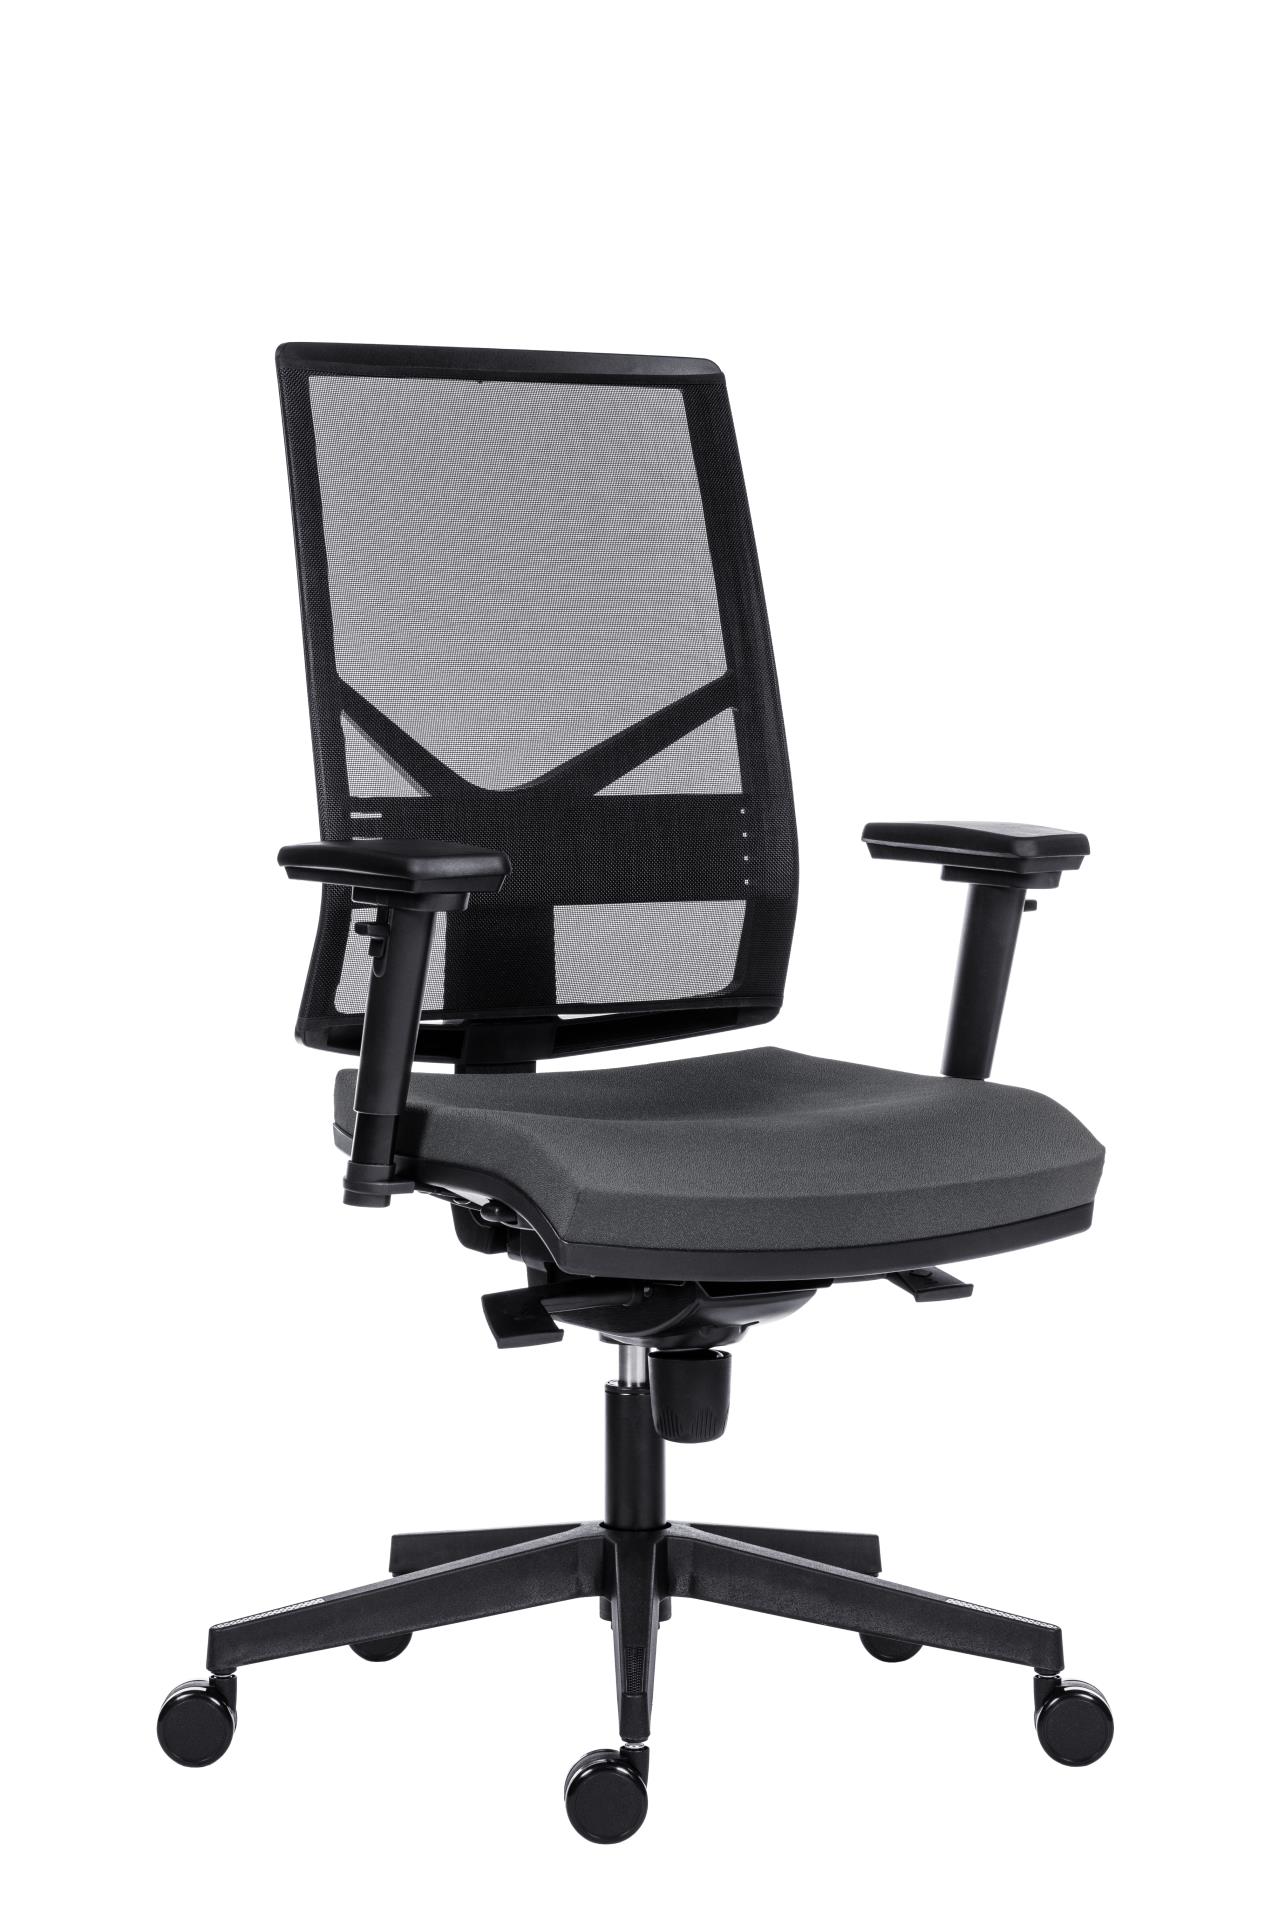 Antares Kancelářská židle Omnia - tmavě šedá